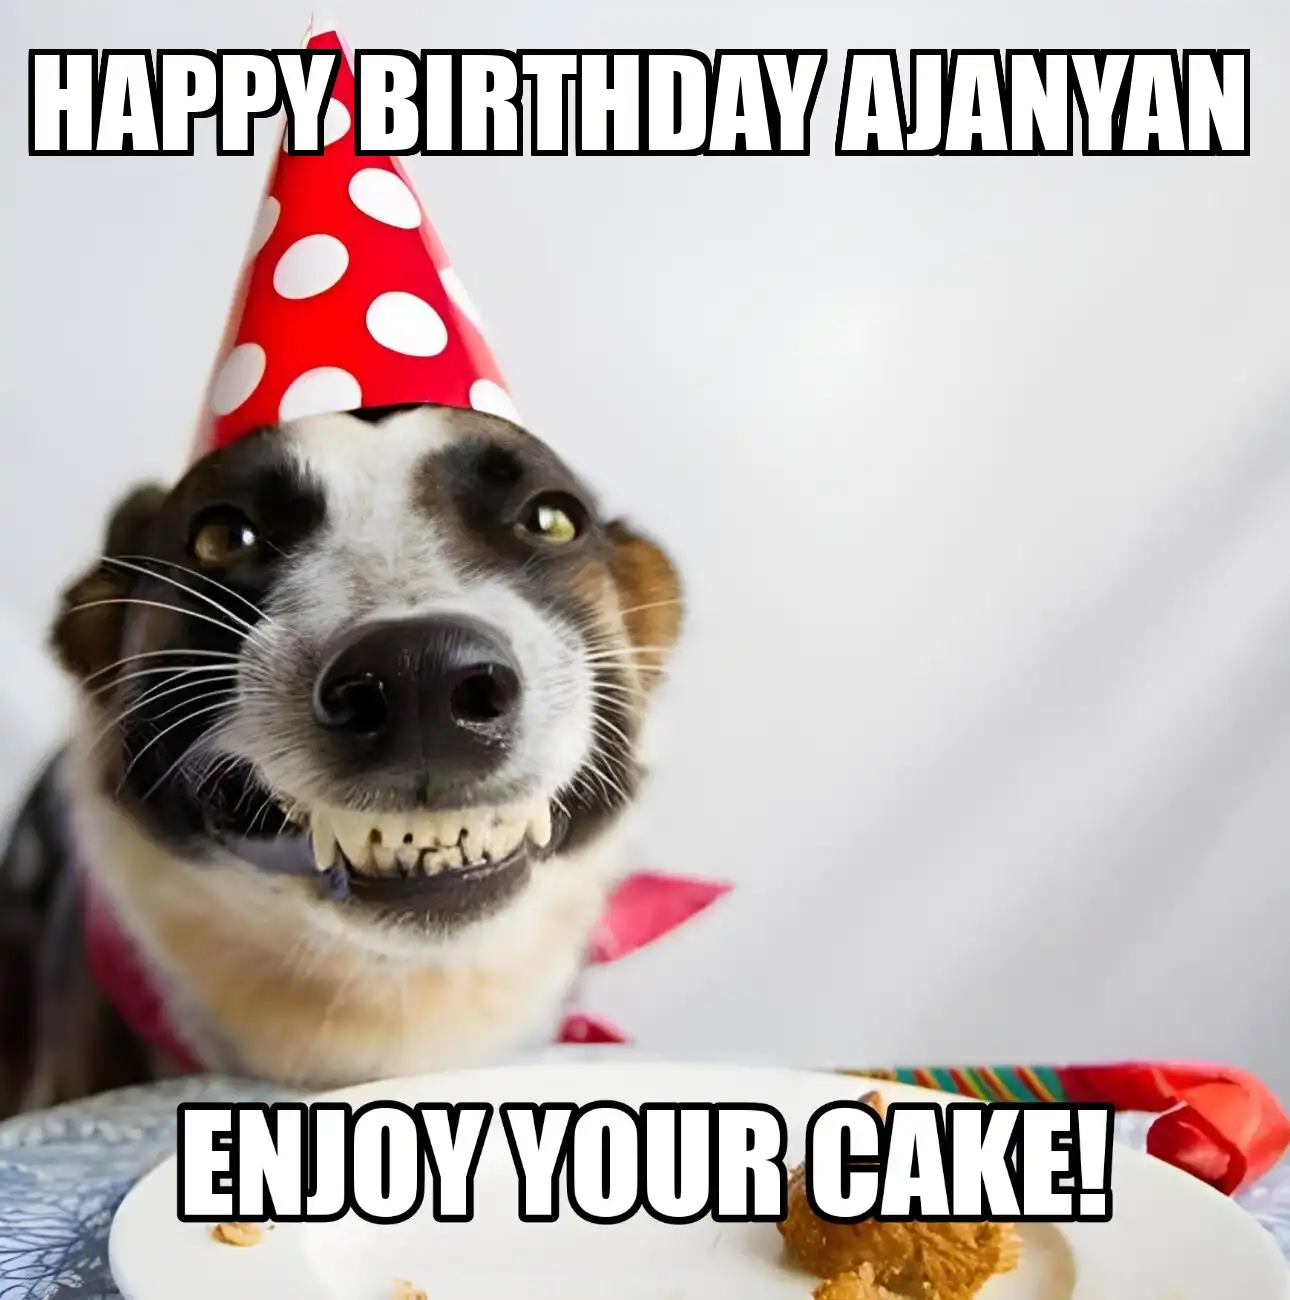 Happy Birthday Ajanyan Enjoy Your Cake Dog Meme